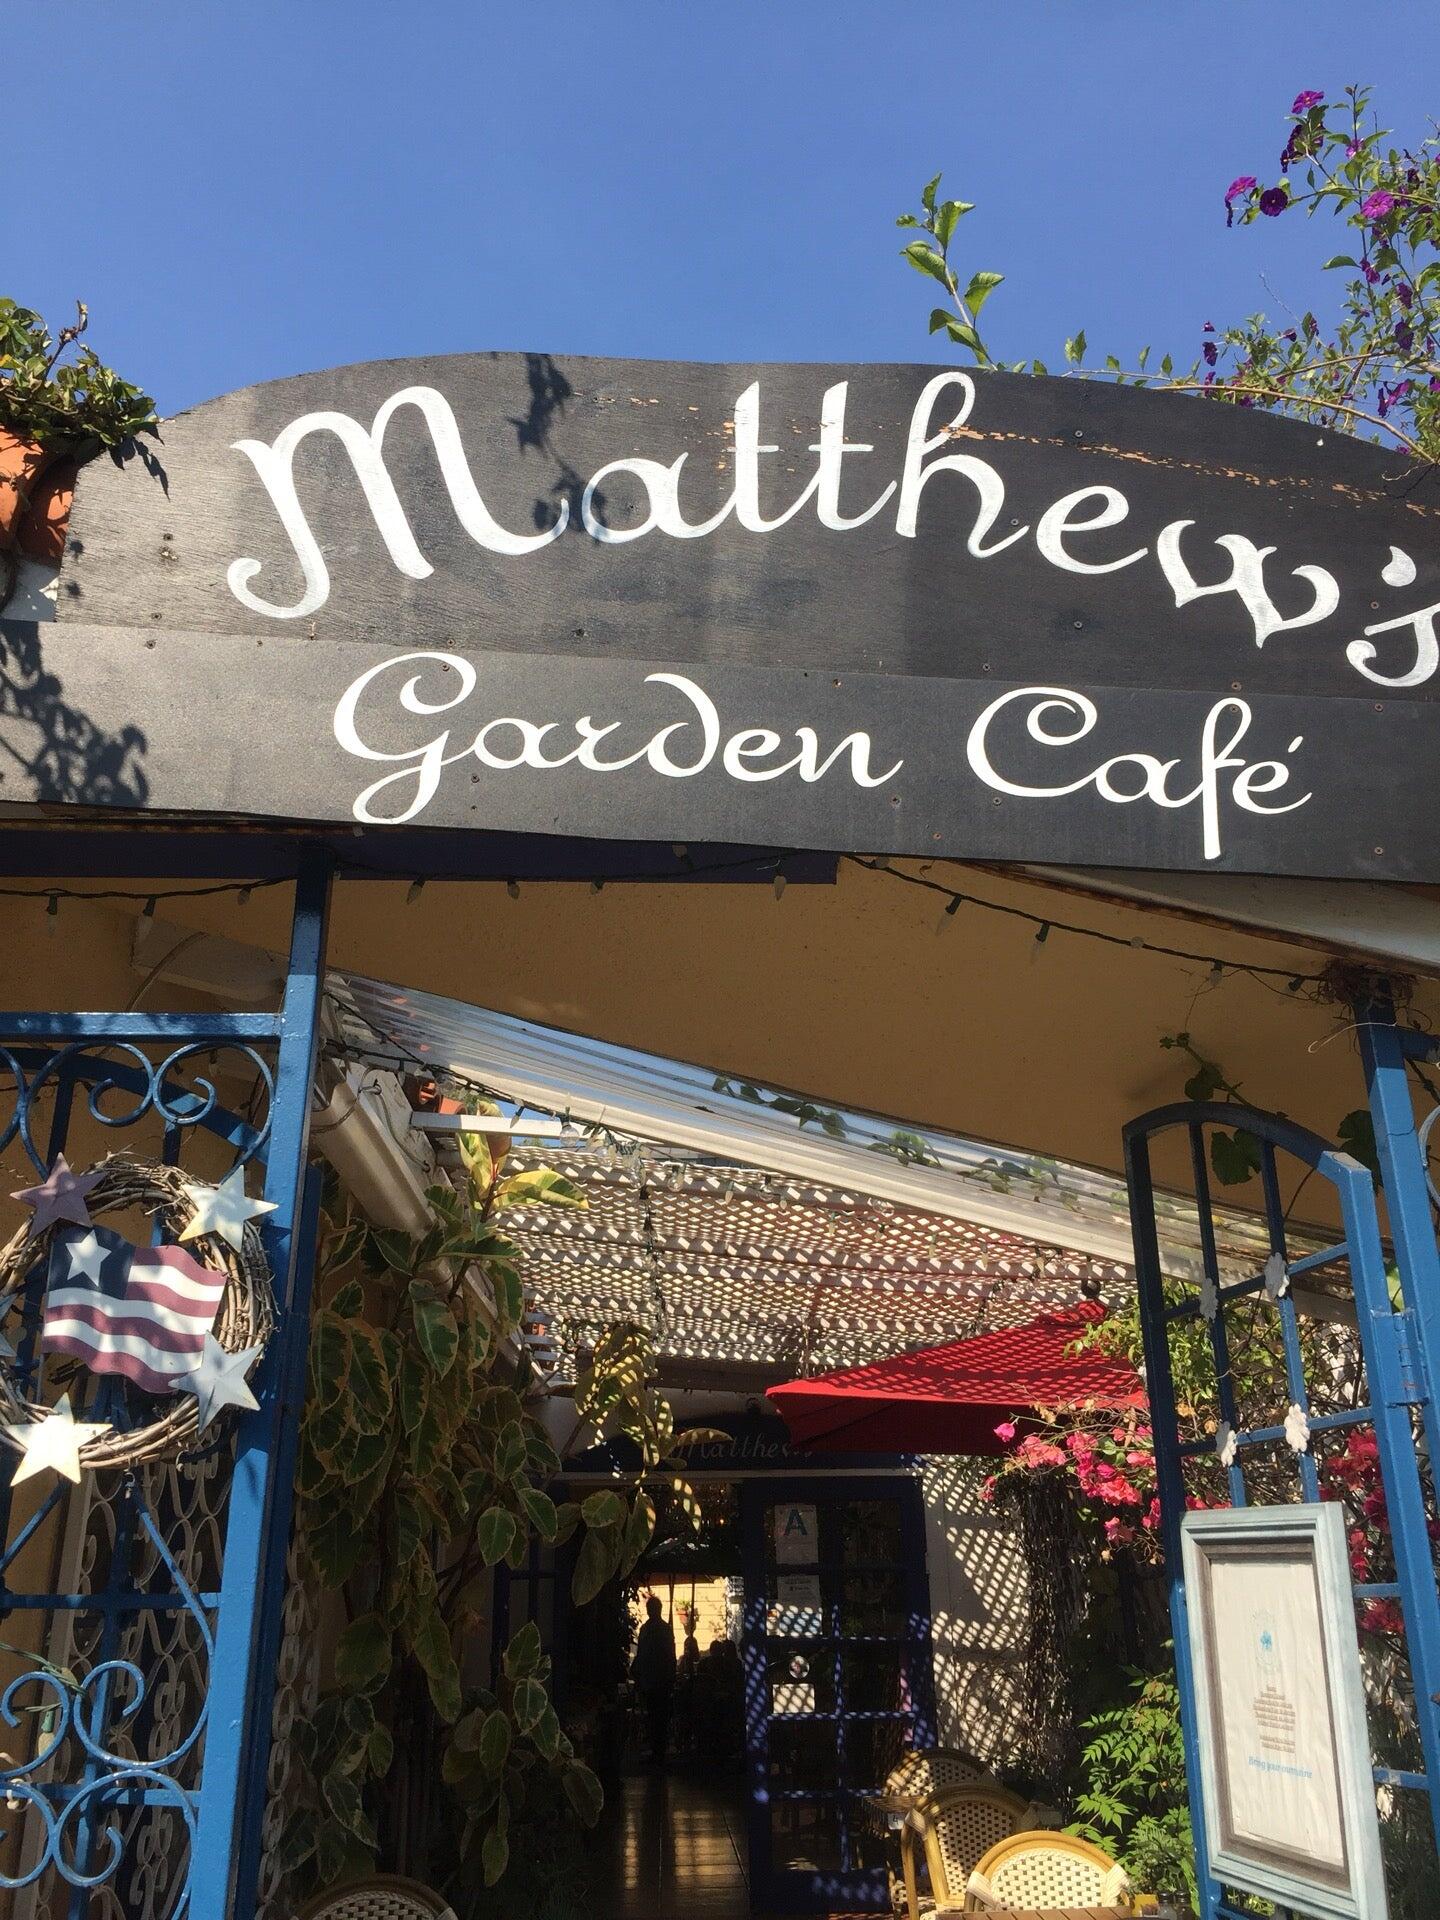 MATTHEWS GARDEN CAFE